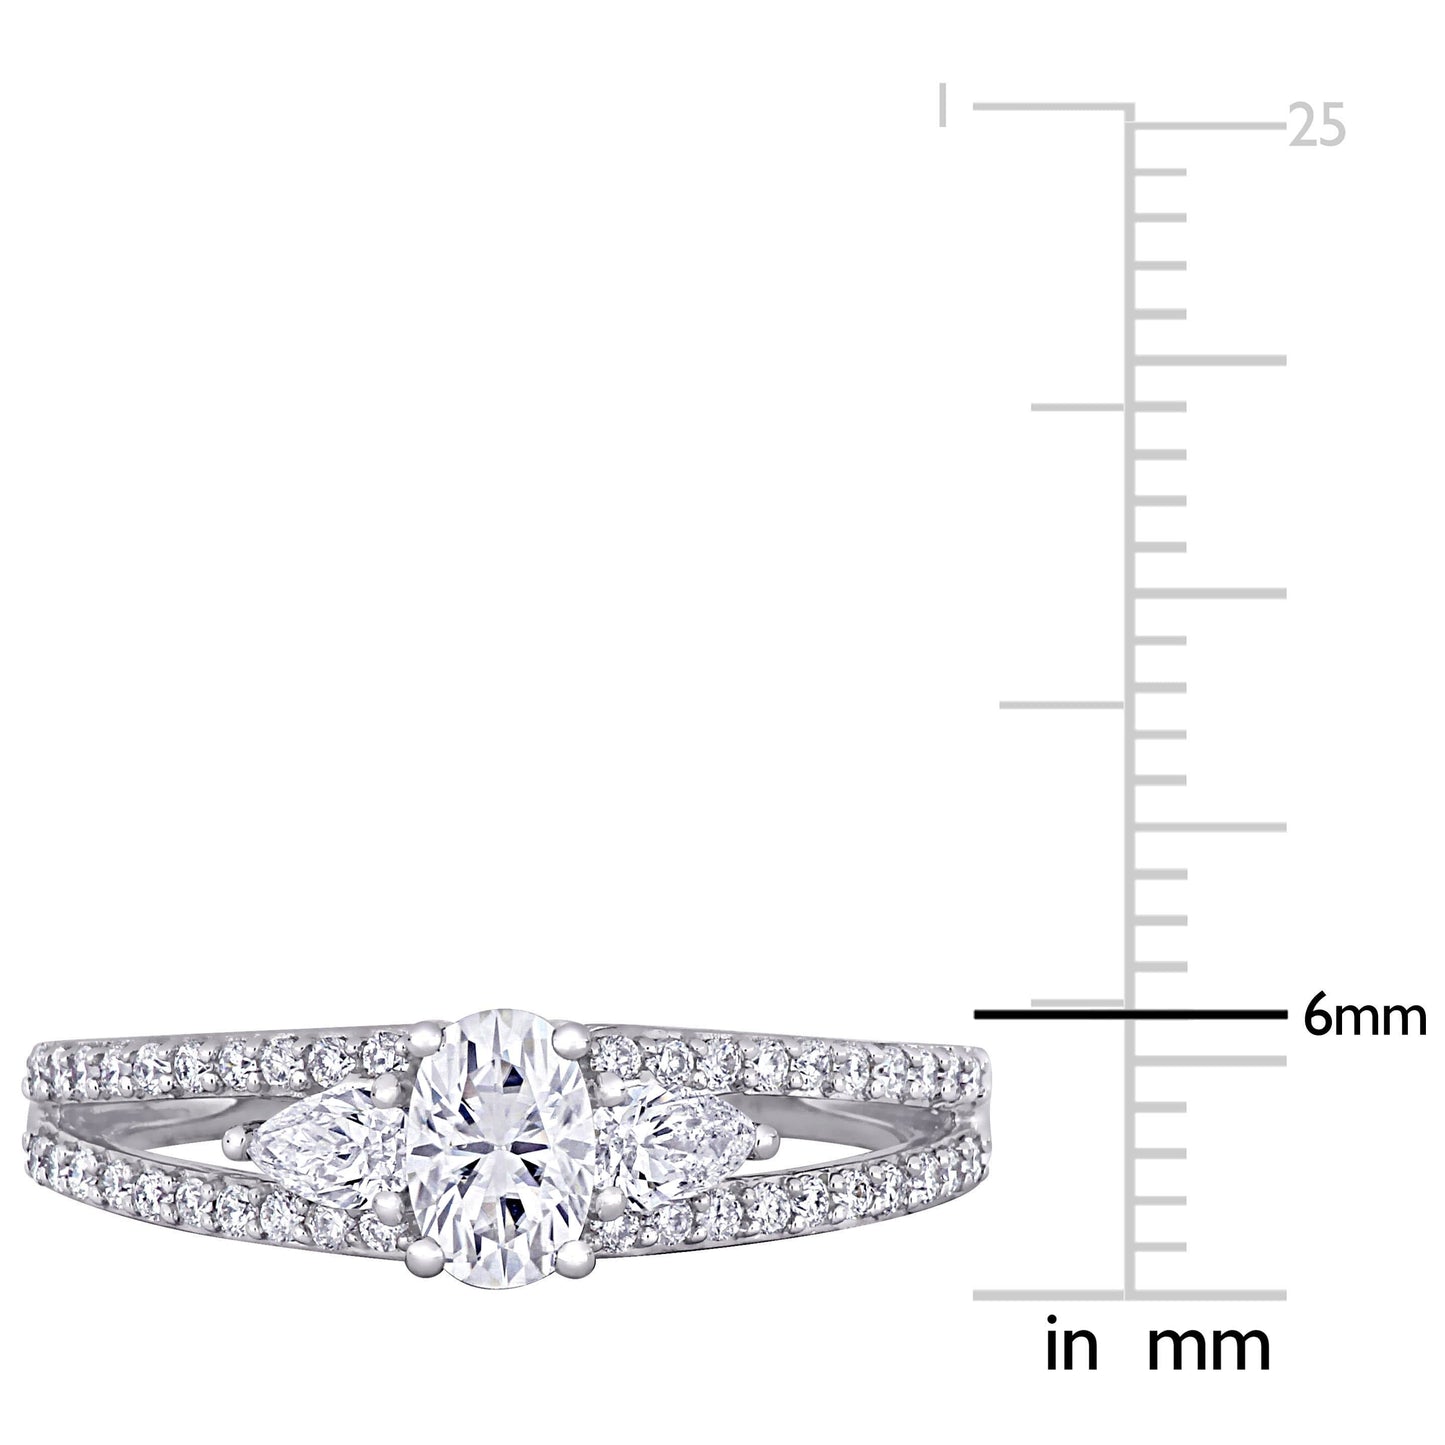 Oval & Pear Diamonds Moissanite Ring in 14k White Gold